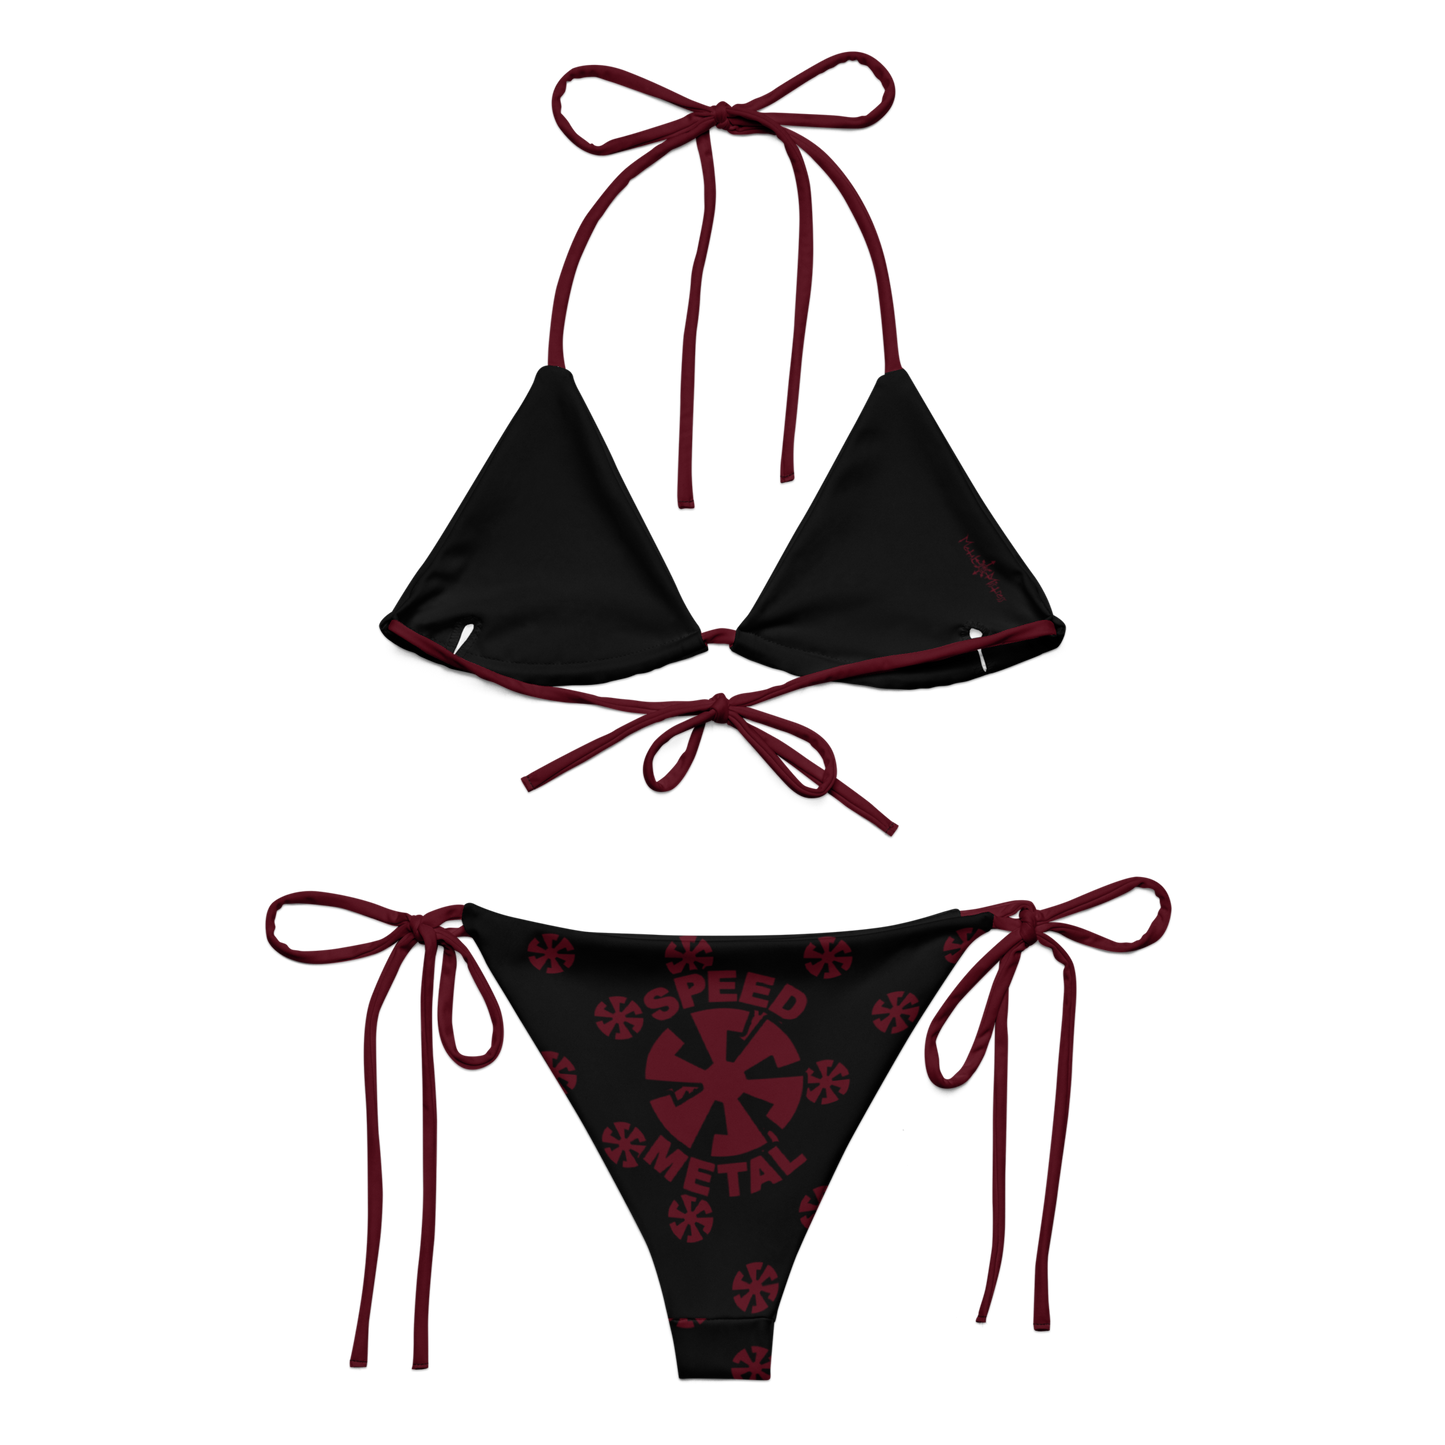 SPEED METAL Red on Black Bikini Swimsuit